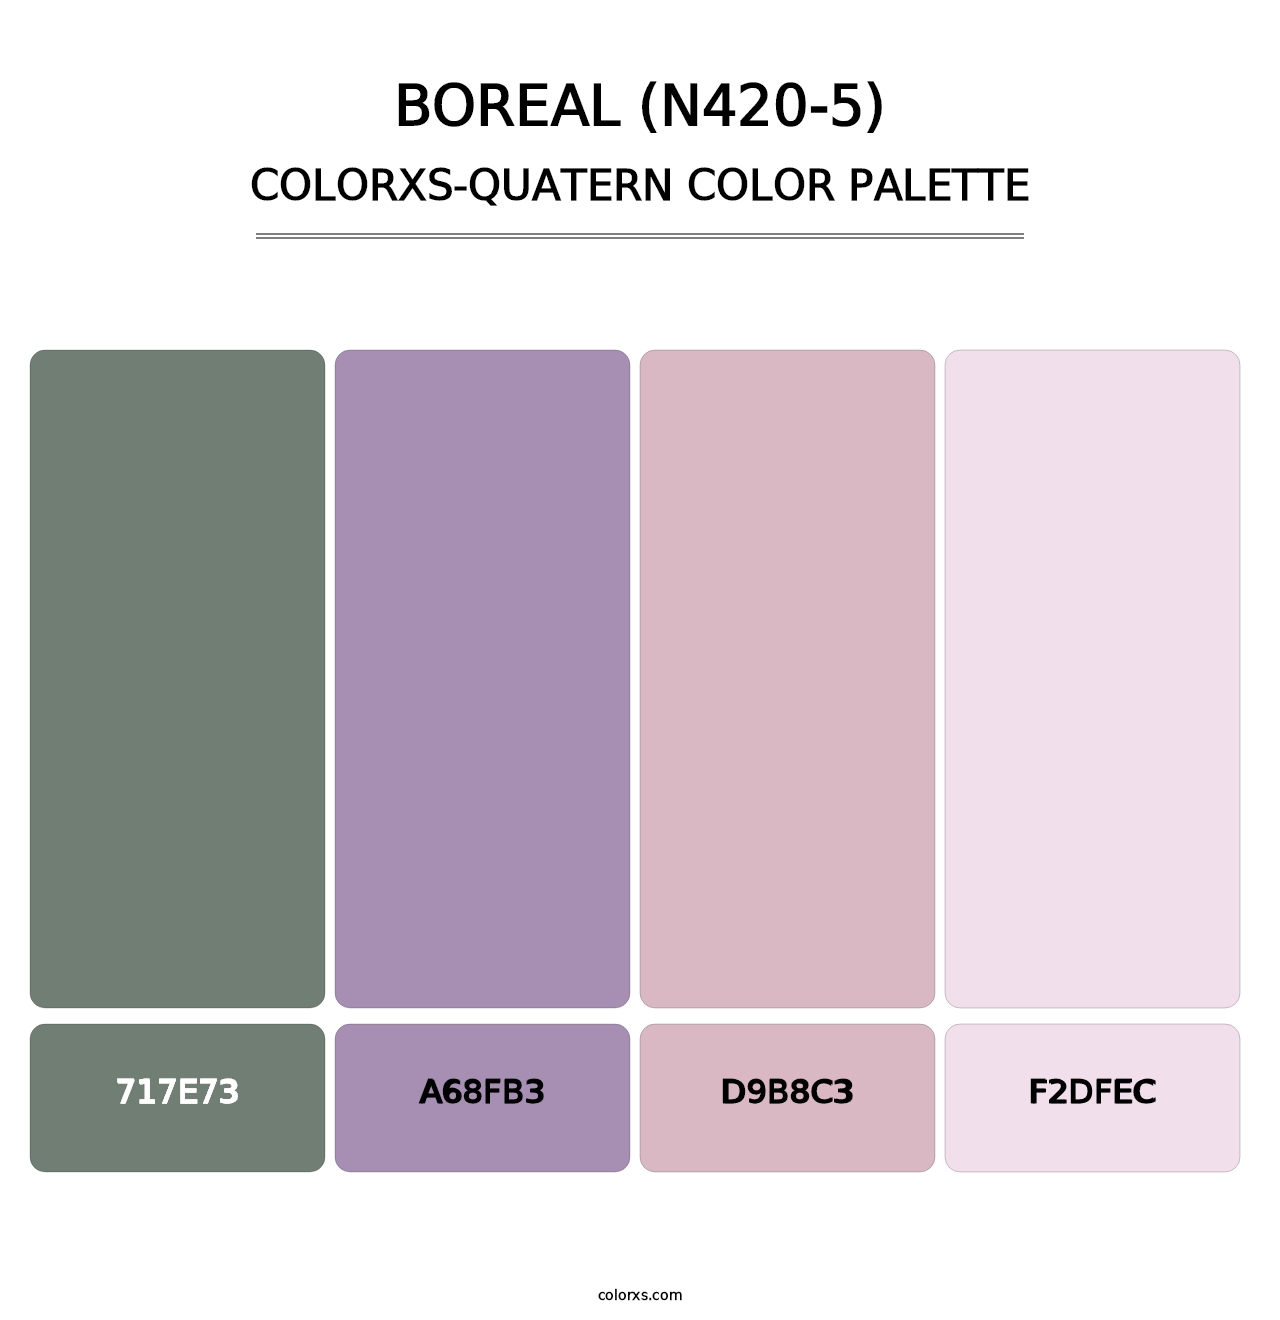 Boreal (N420-5) - Colorxs Quatern Palette